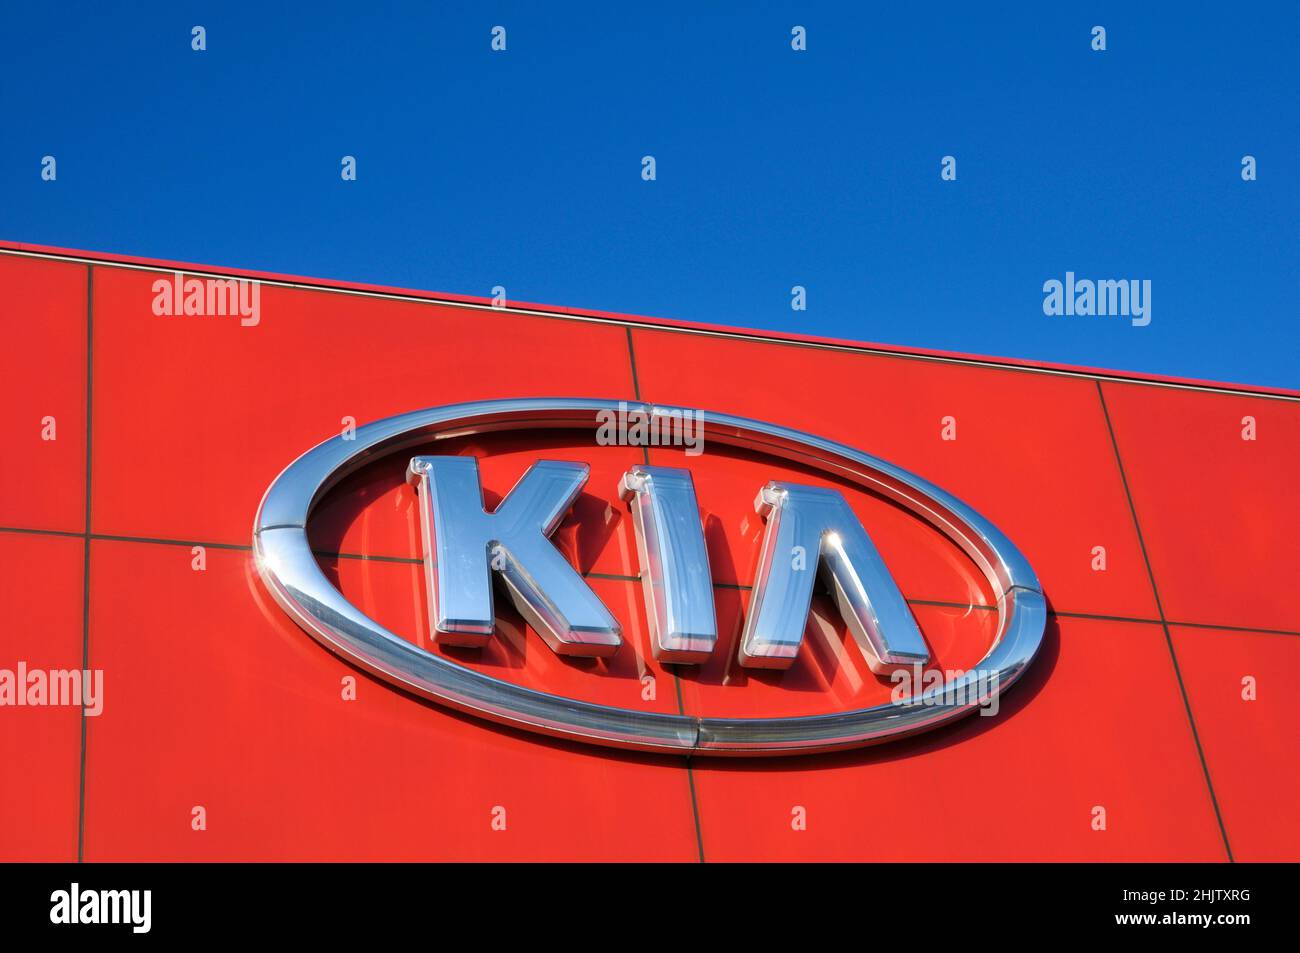 KIA motors brand company logo sign at a car dealership against blue sky. Stock Photo